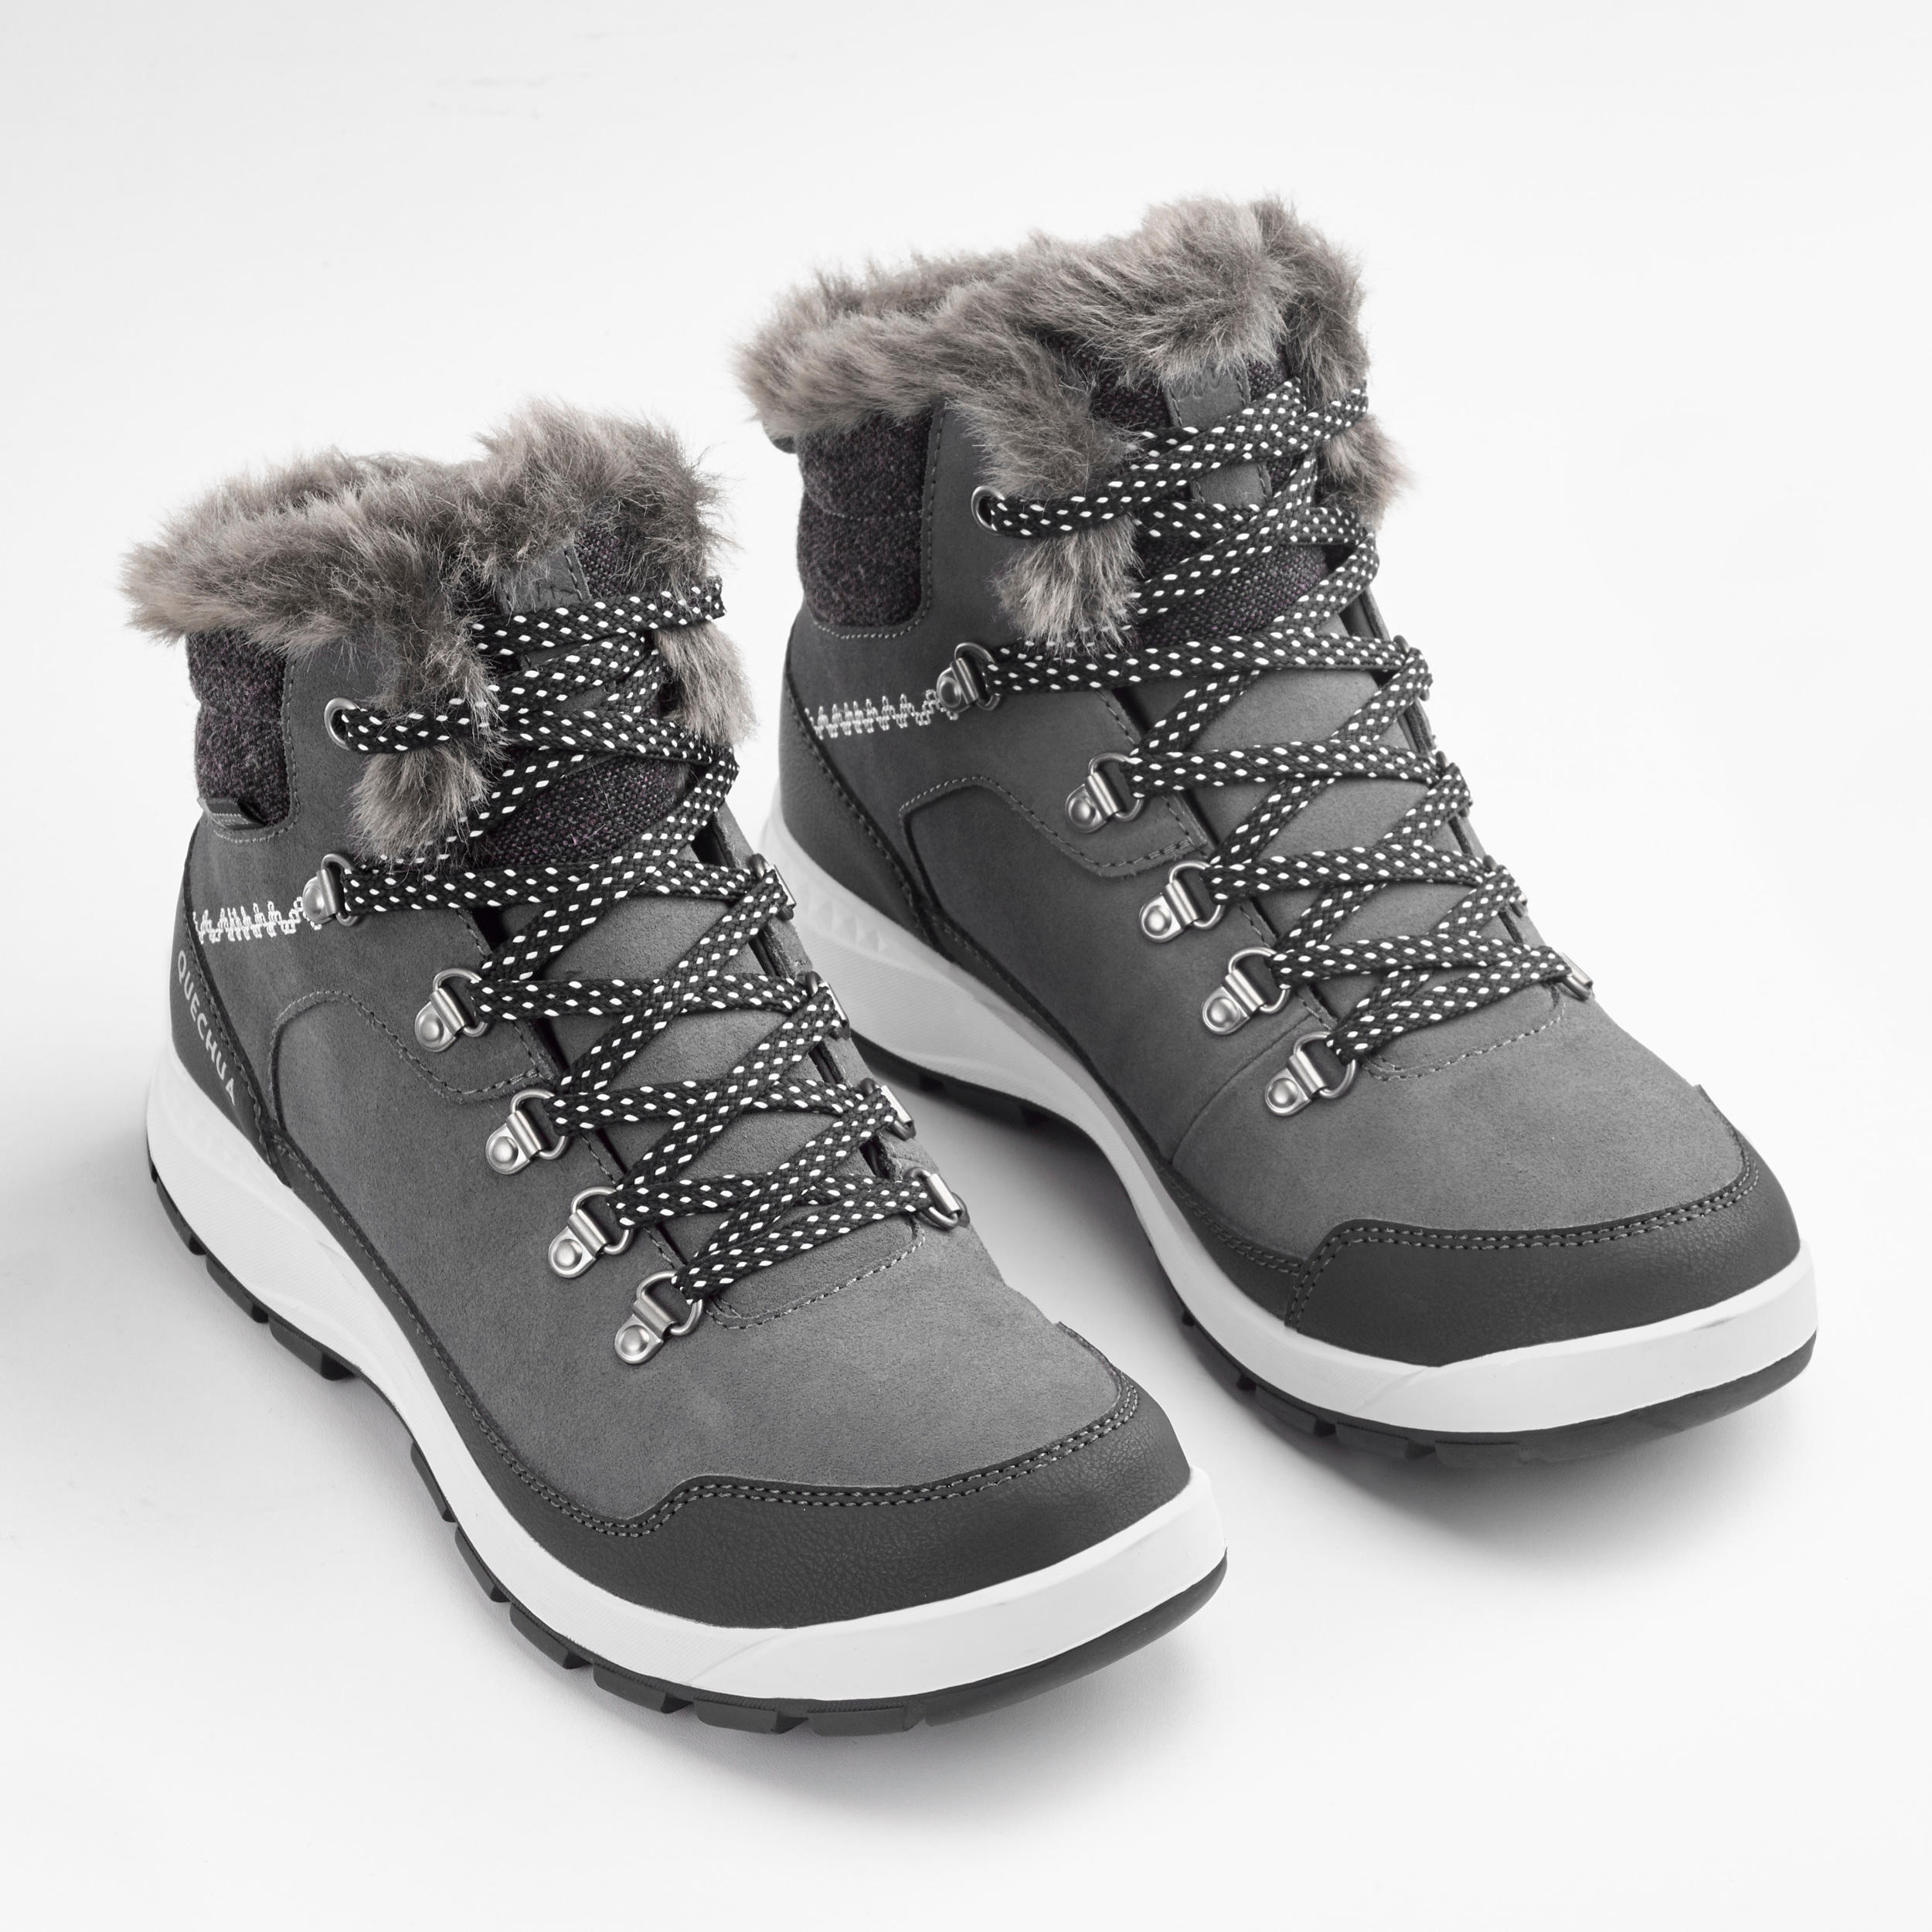 Women's Winter Boots - SH 900 Mid Grey - Dark grey - Quechua - Decathlon